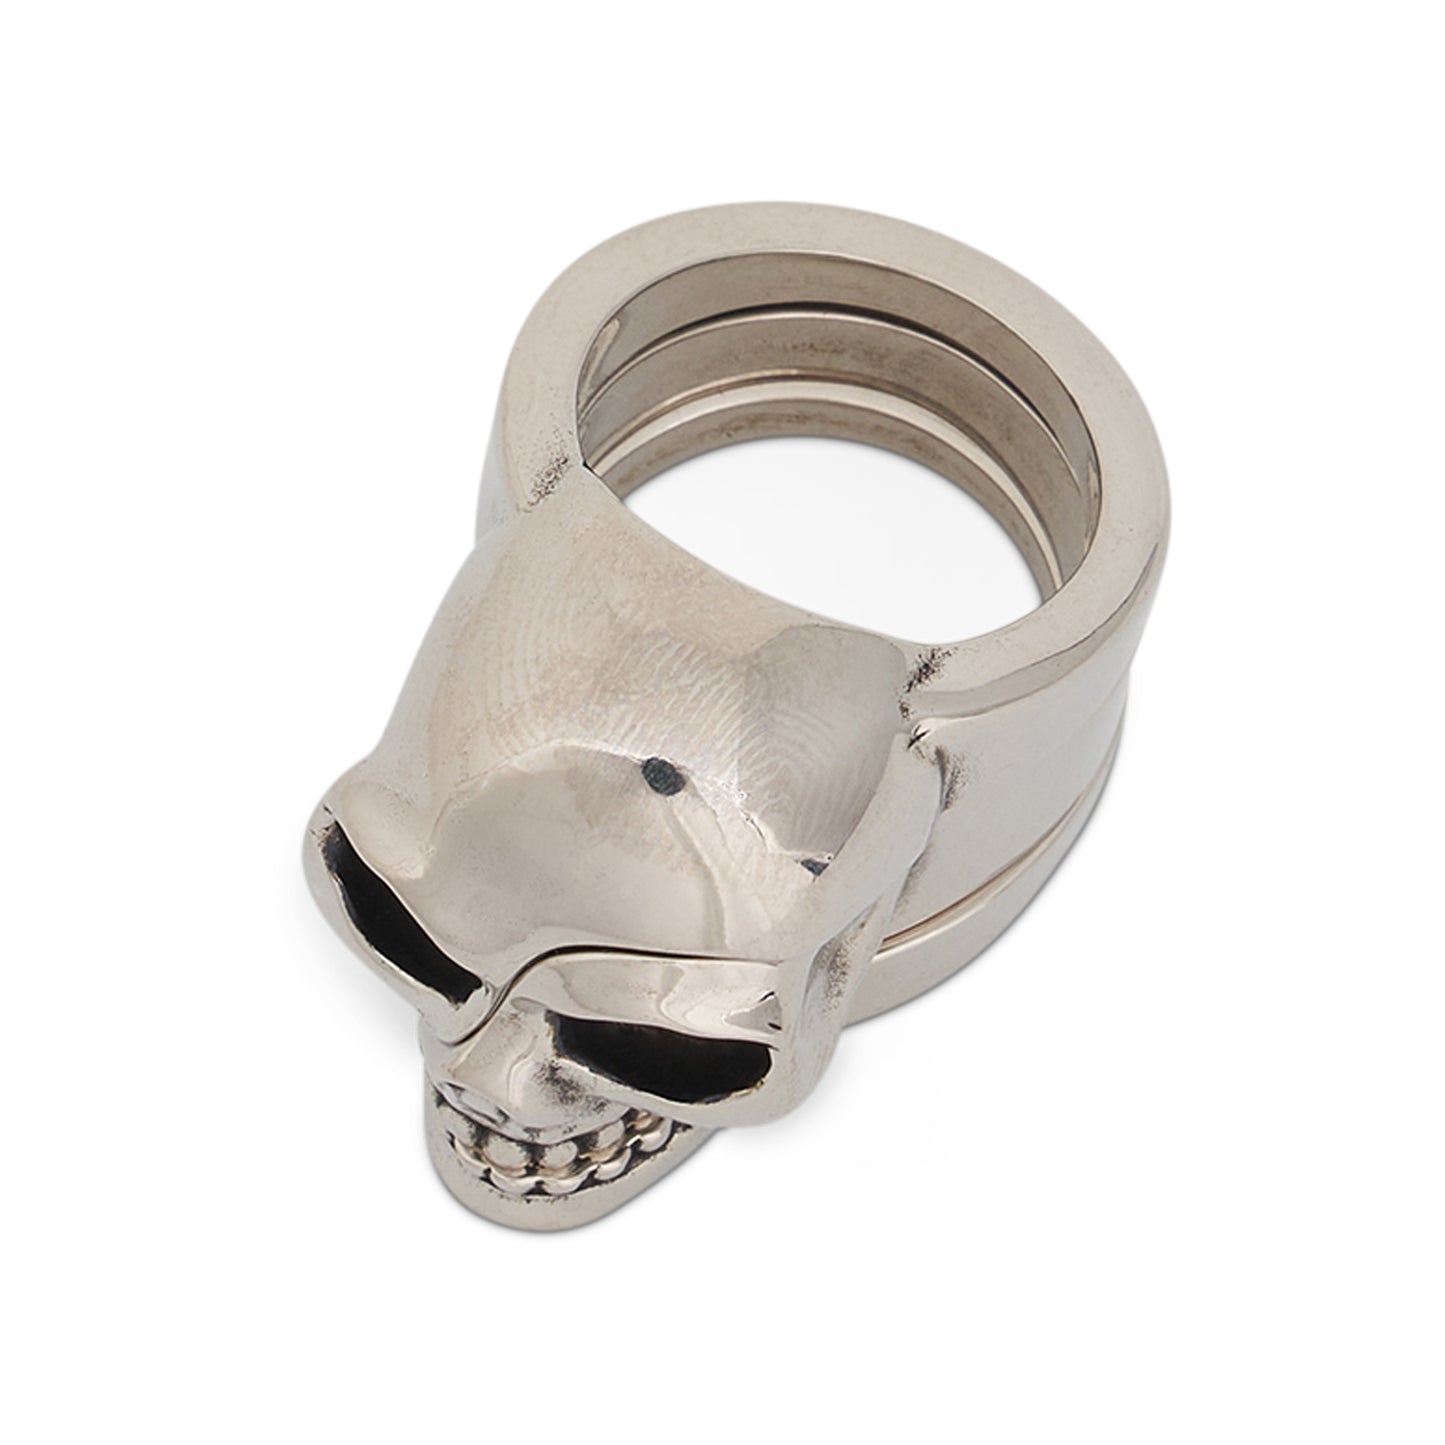 Divided Skull Ring in Antique Silver